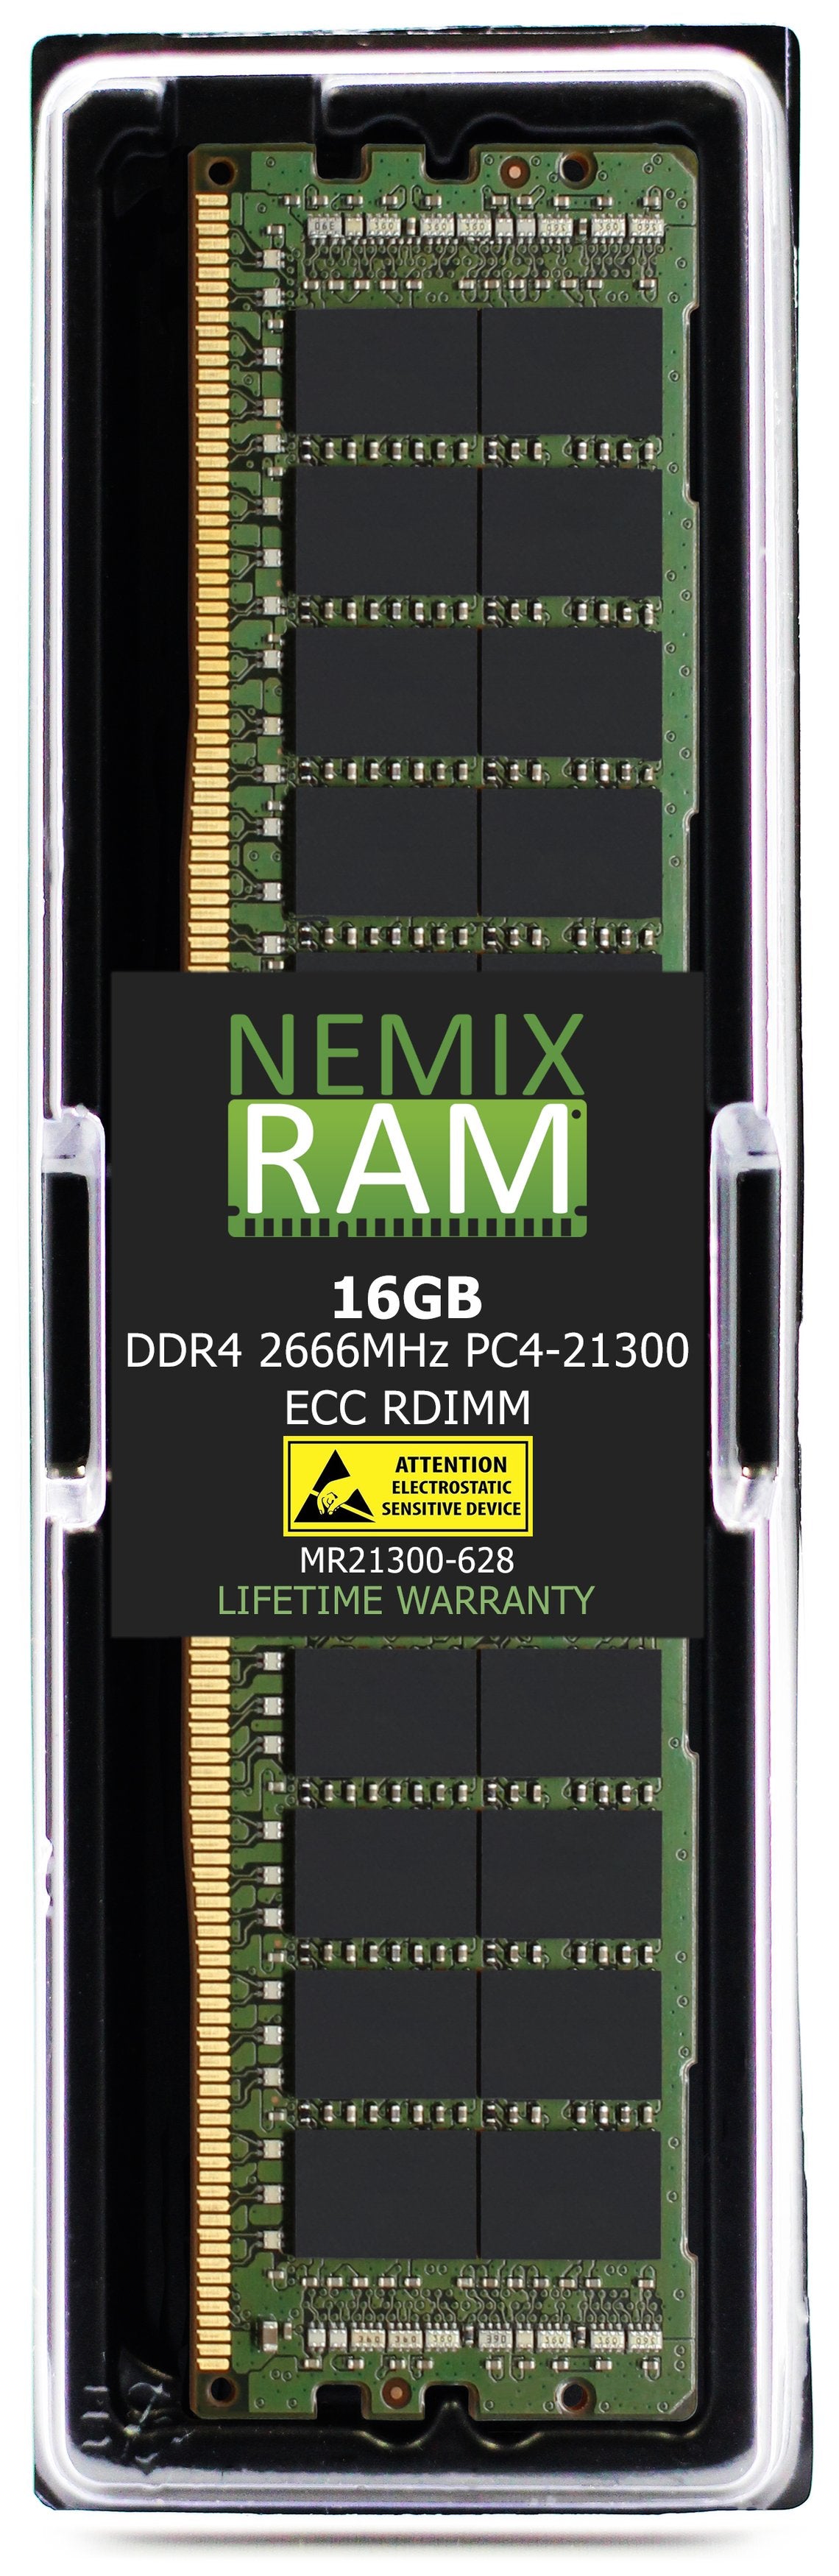 NEC Express5800 T120h Memory Module N8102-710 16GB DDR4 2666MHZ PC4-21300 RDIMM